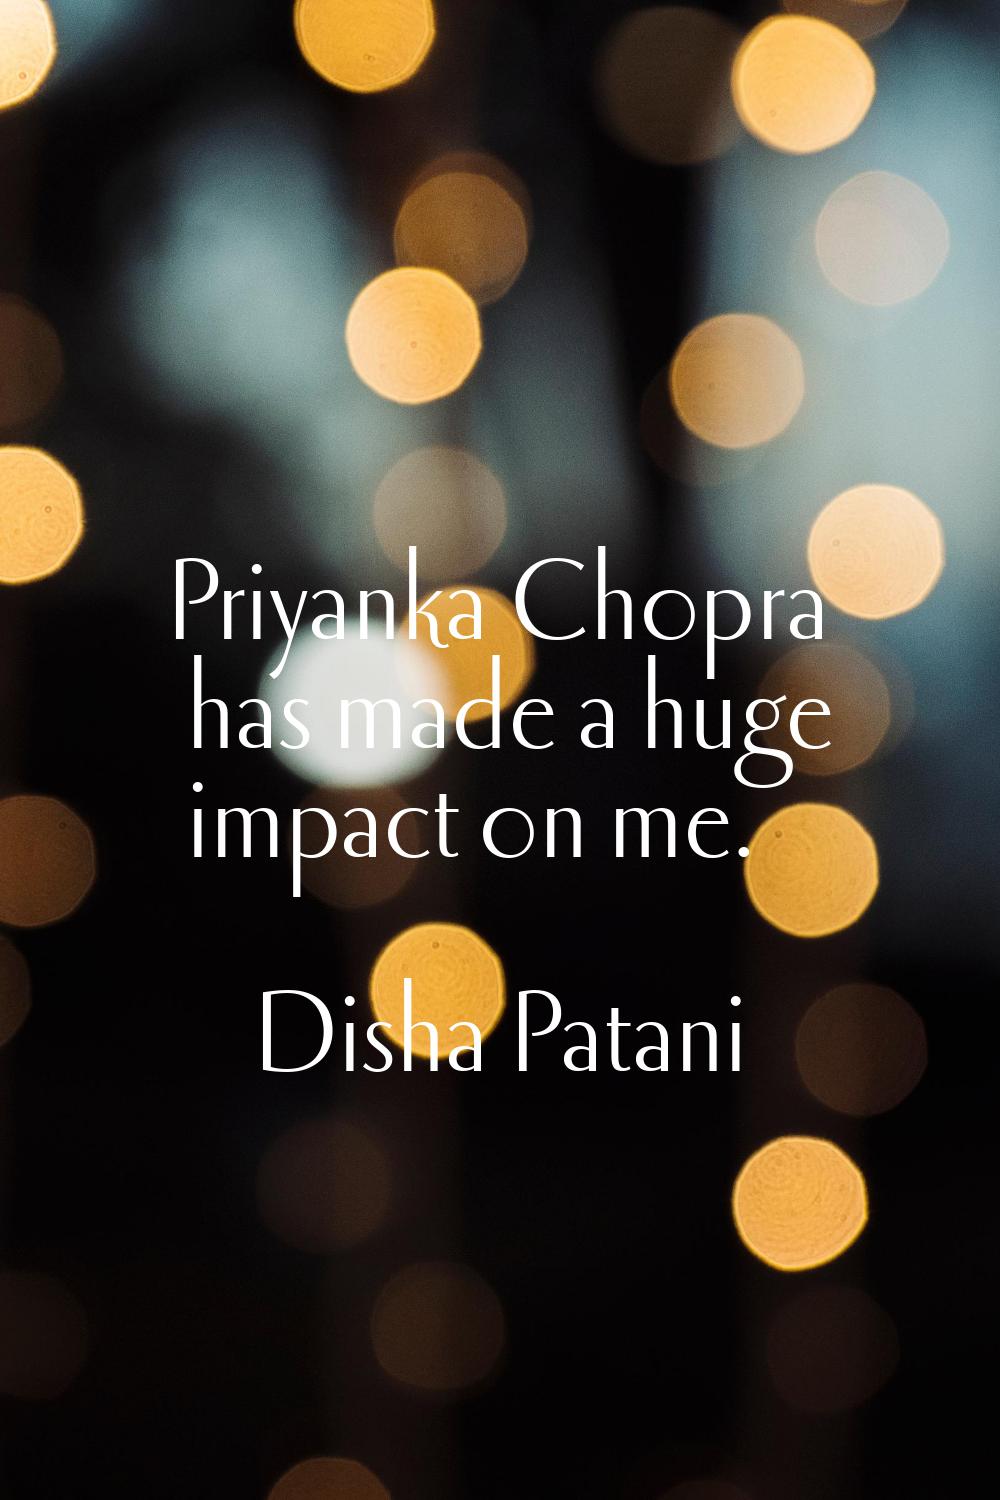 Priyanka Chopra has made a huge impact on me.